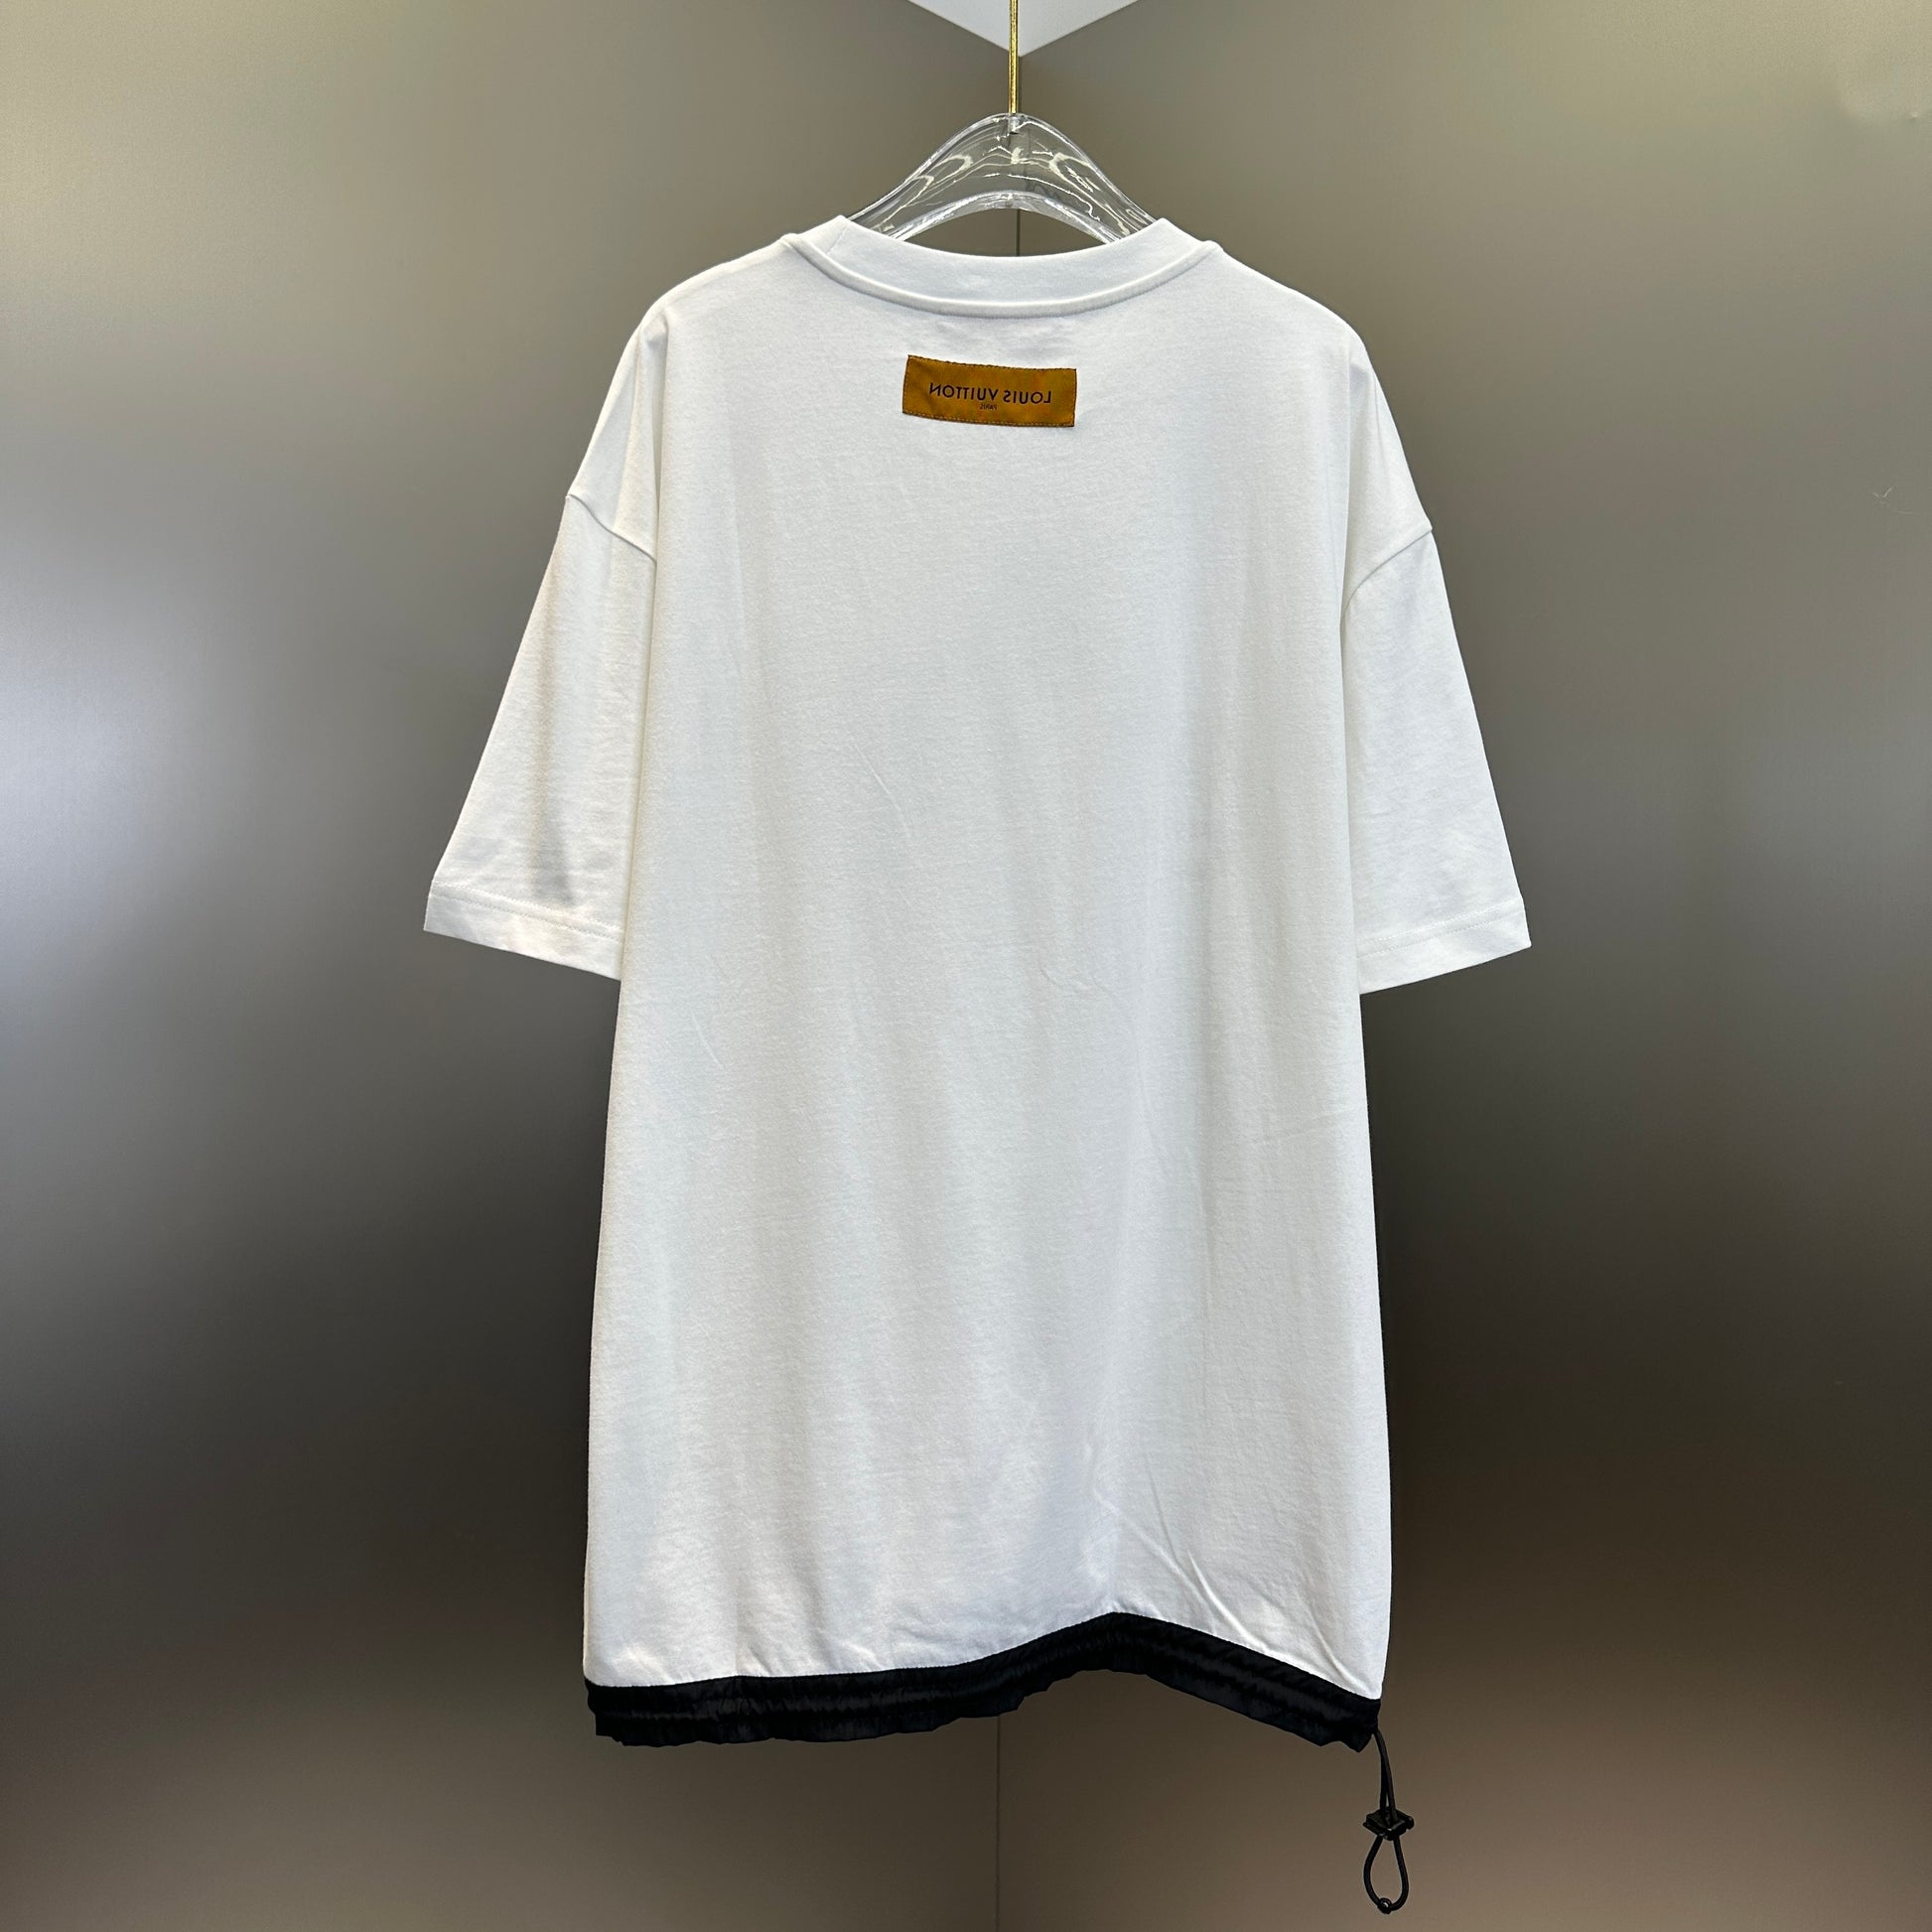 Louis Vuitton White Monogram Cotton Toweling T-Shirt XXL Louis